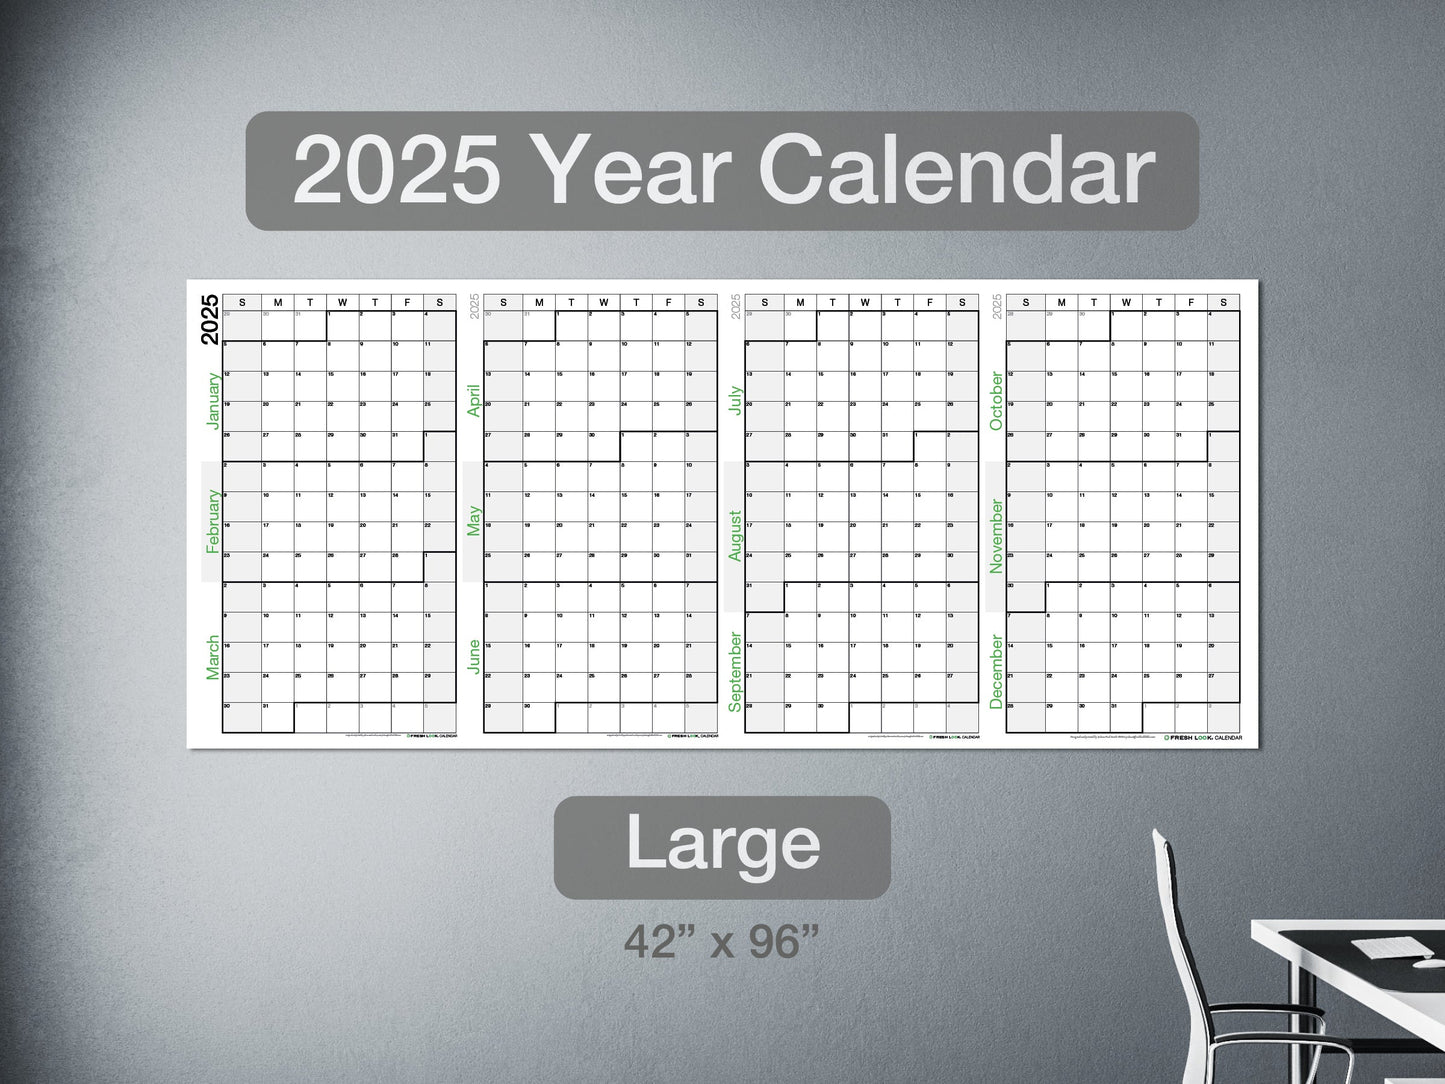 2025 Year Calendar Large